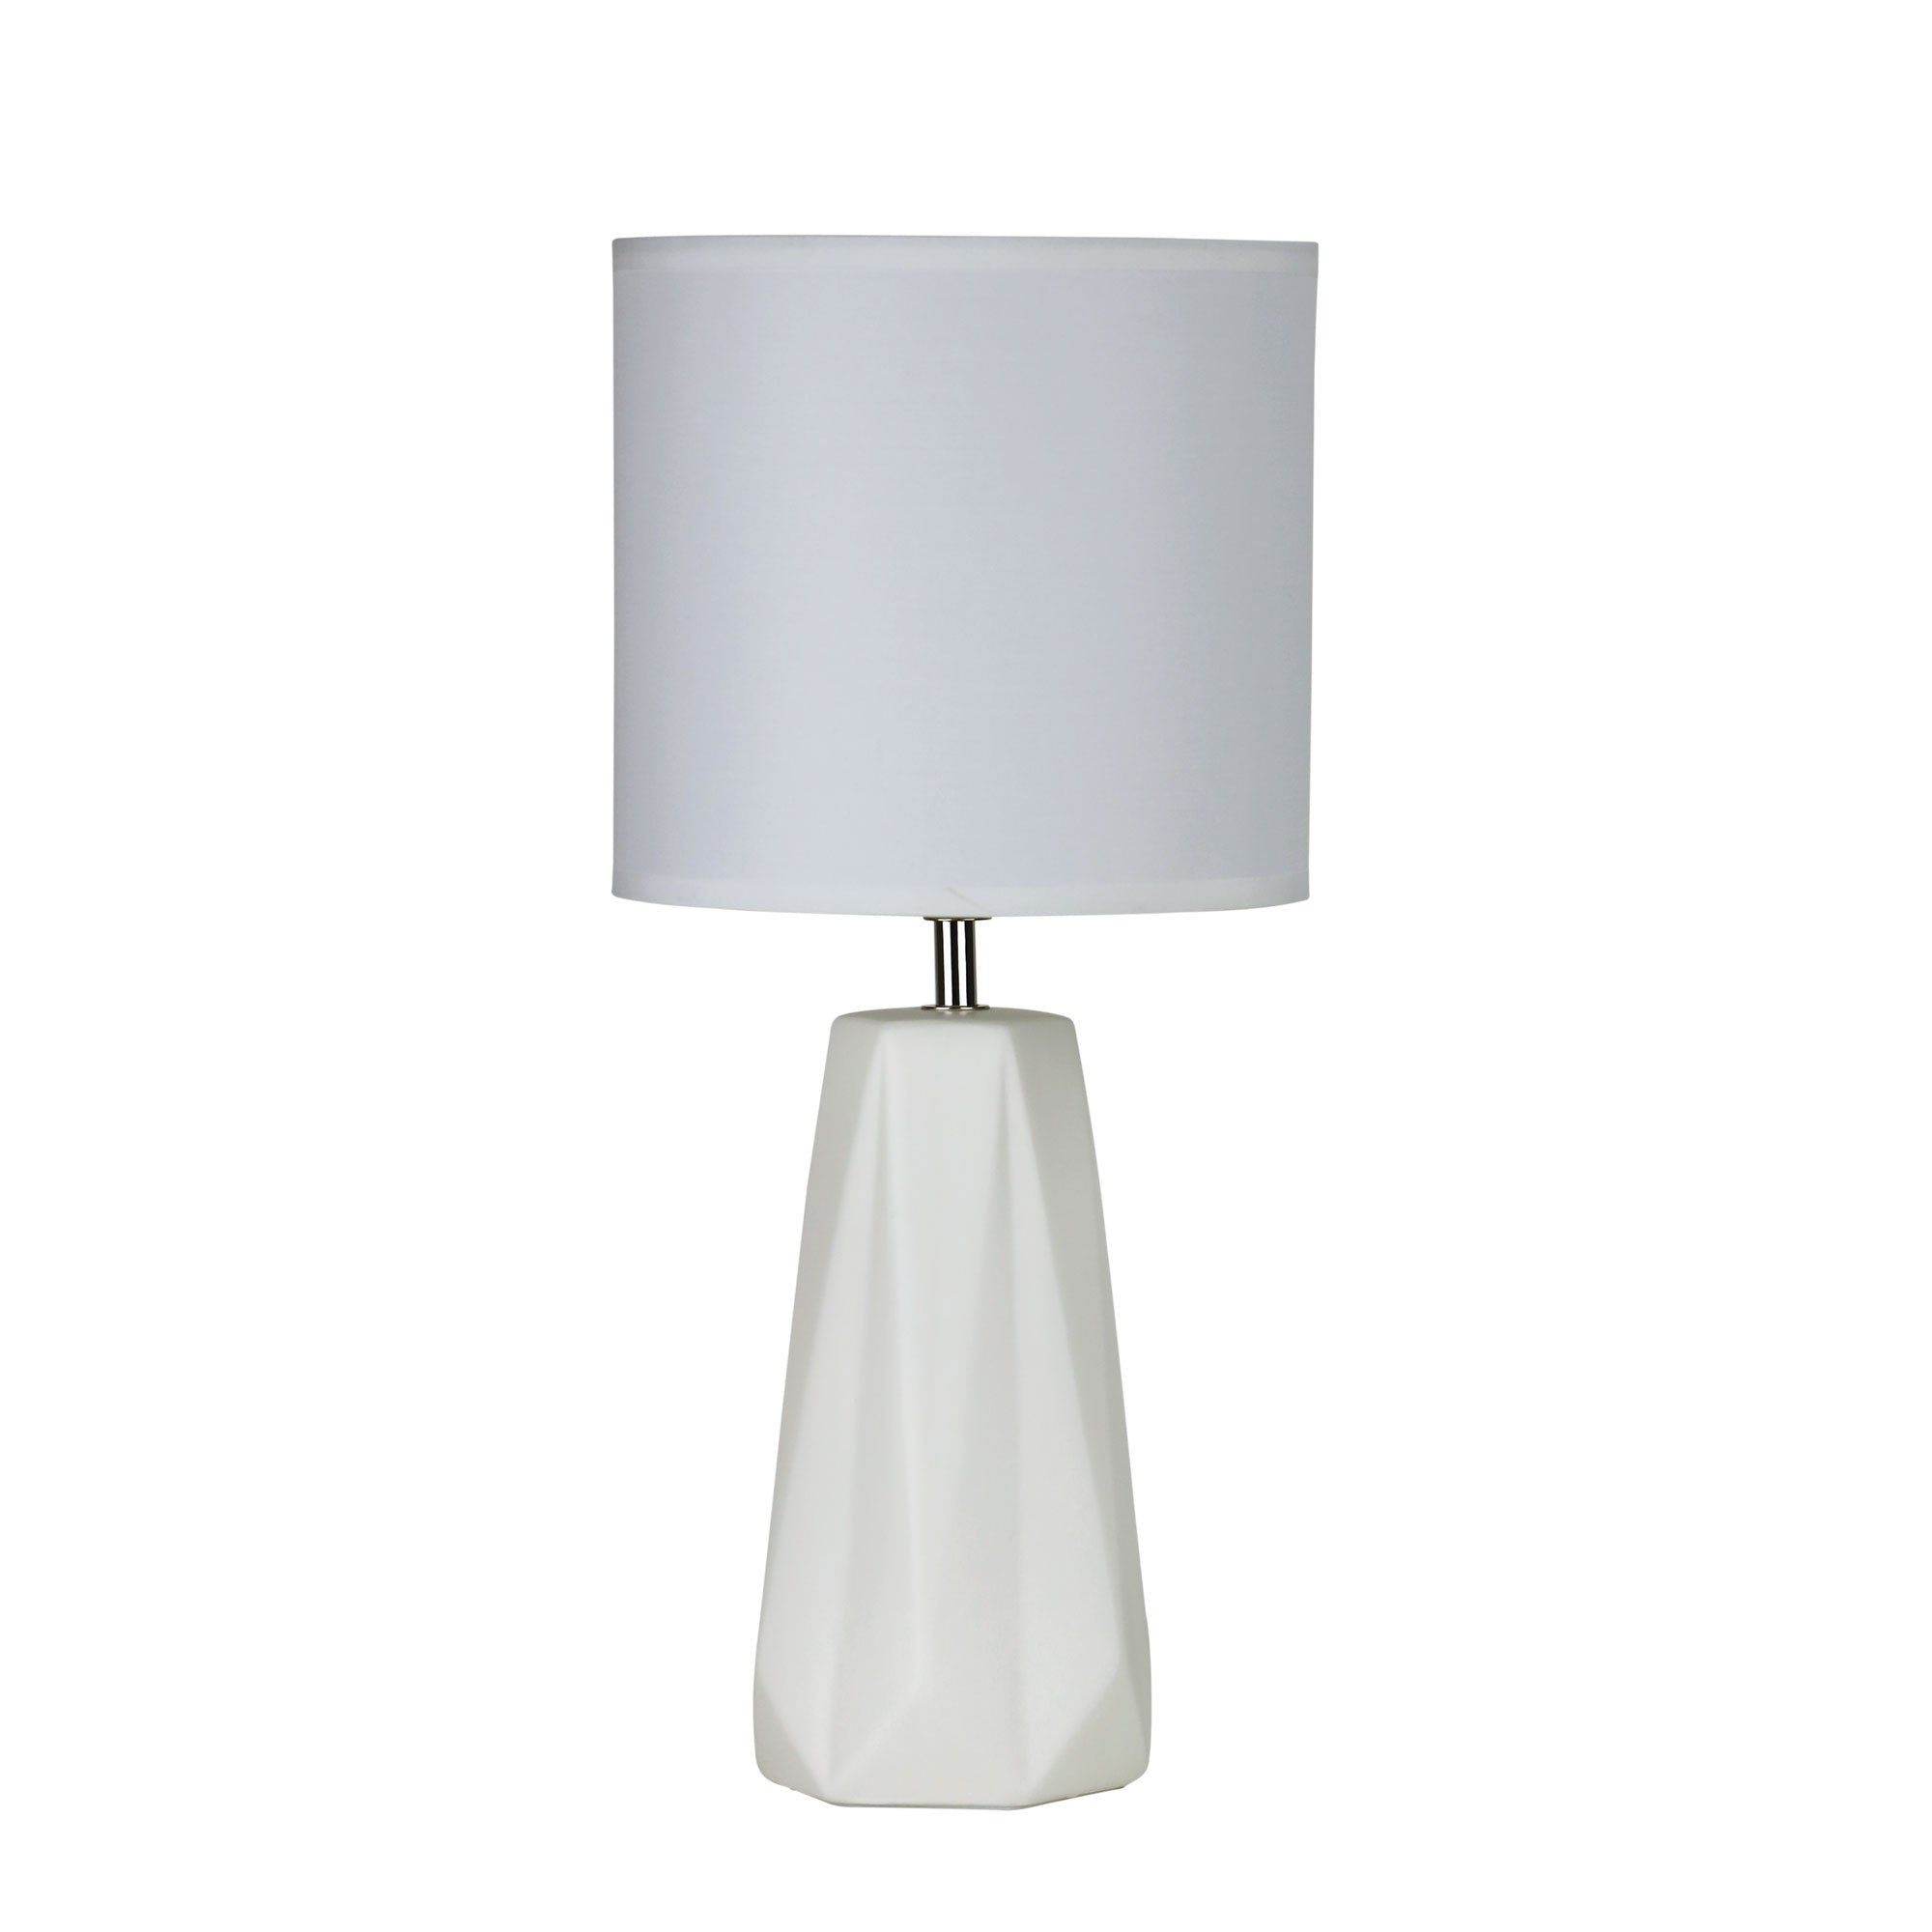 Shelly 1 Light Table Lamp White - OL90115WH